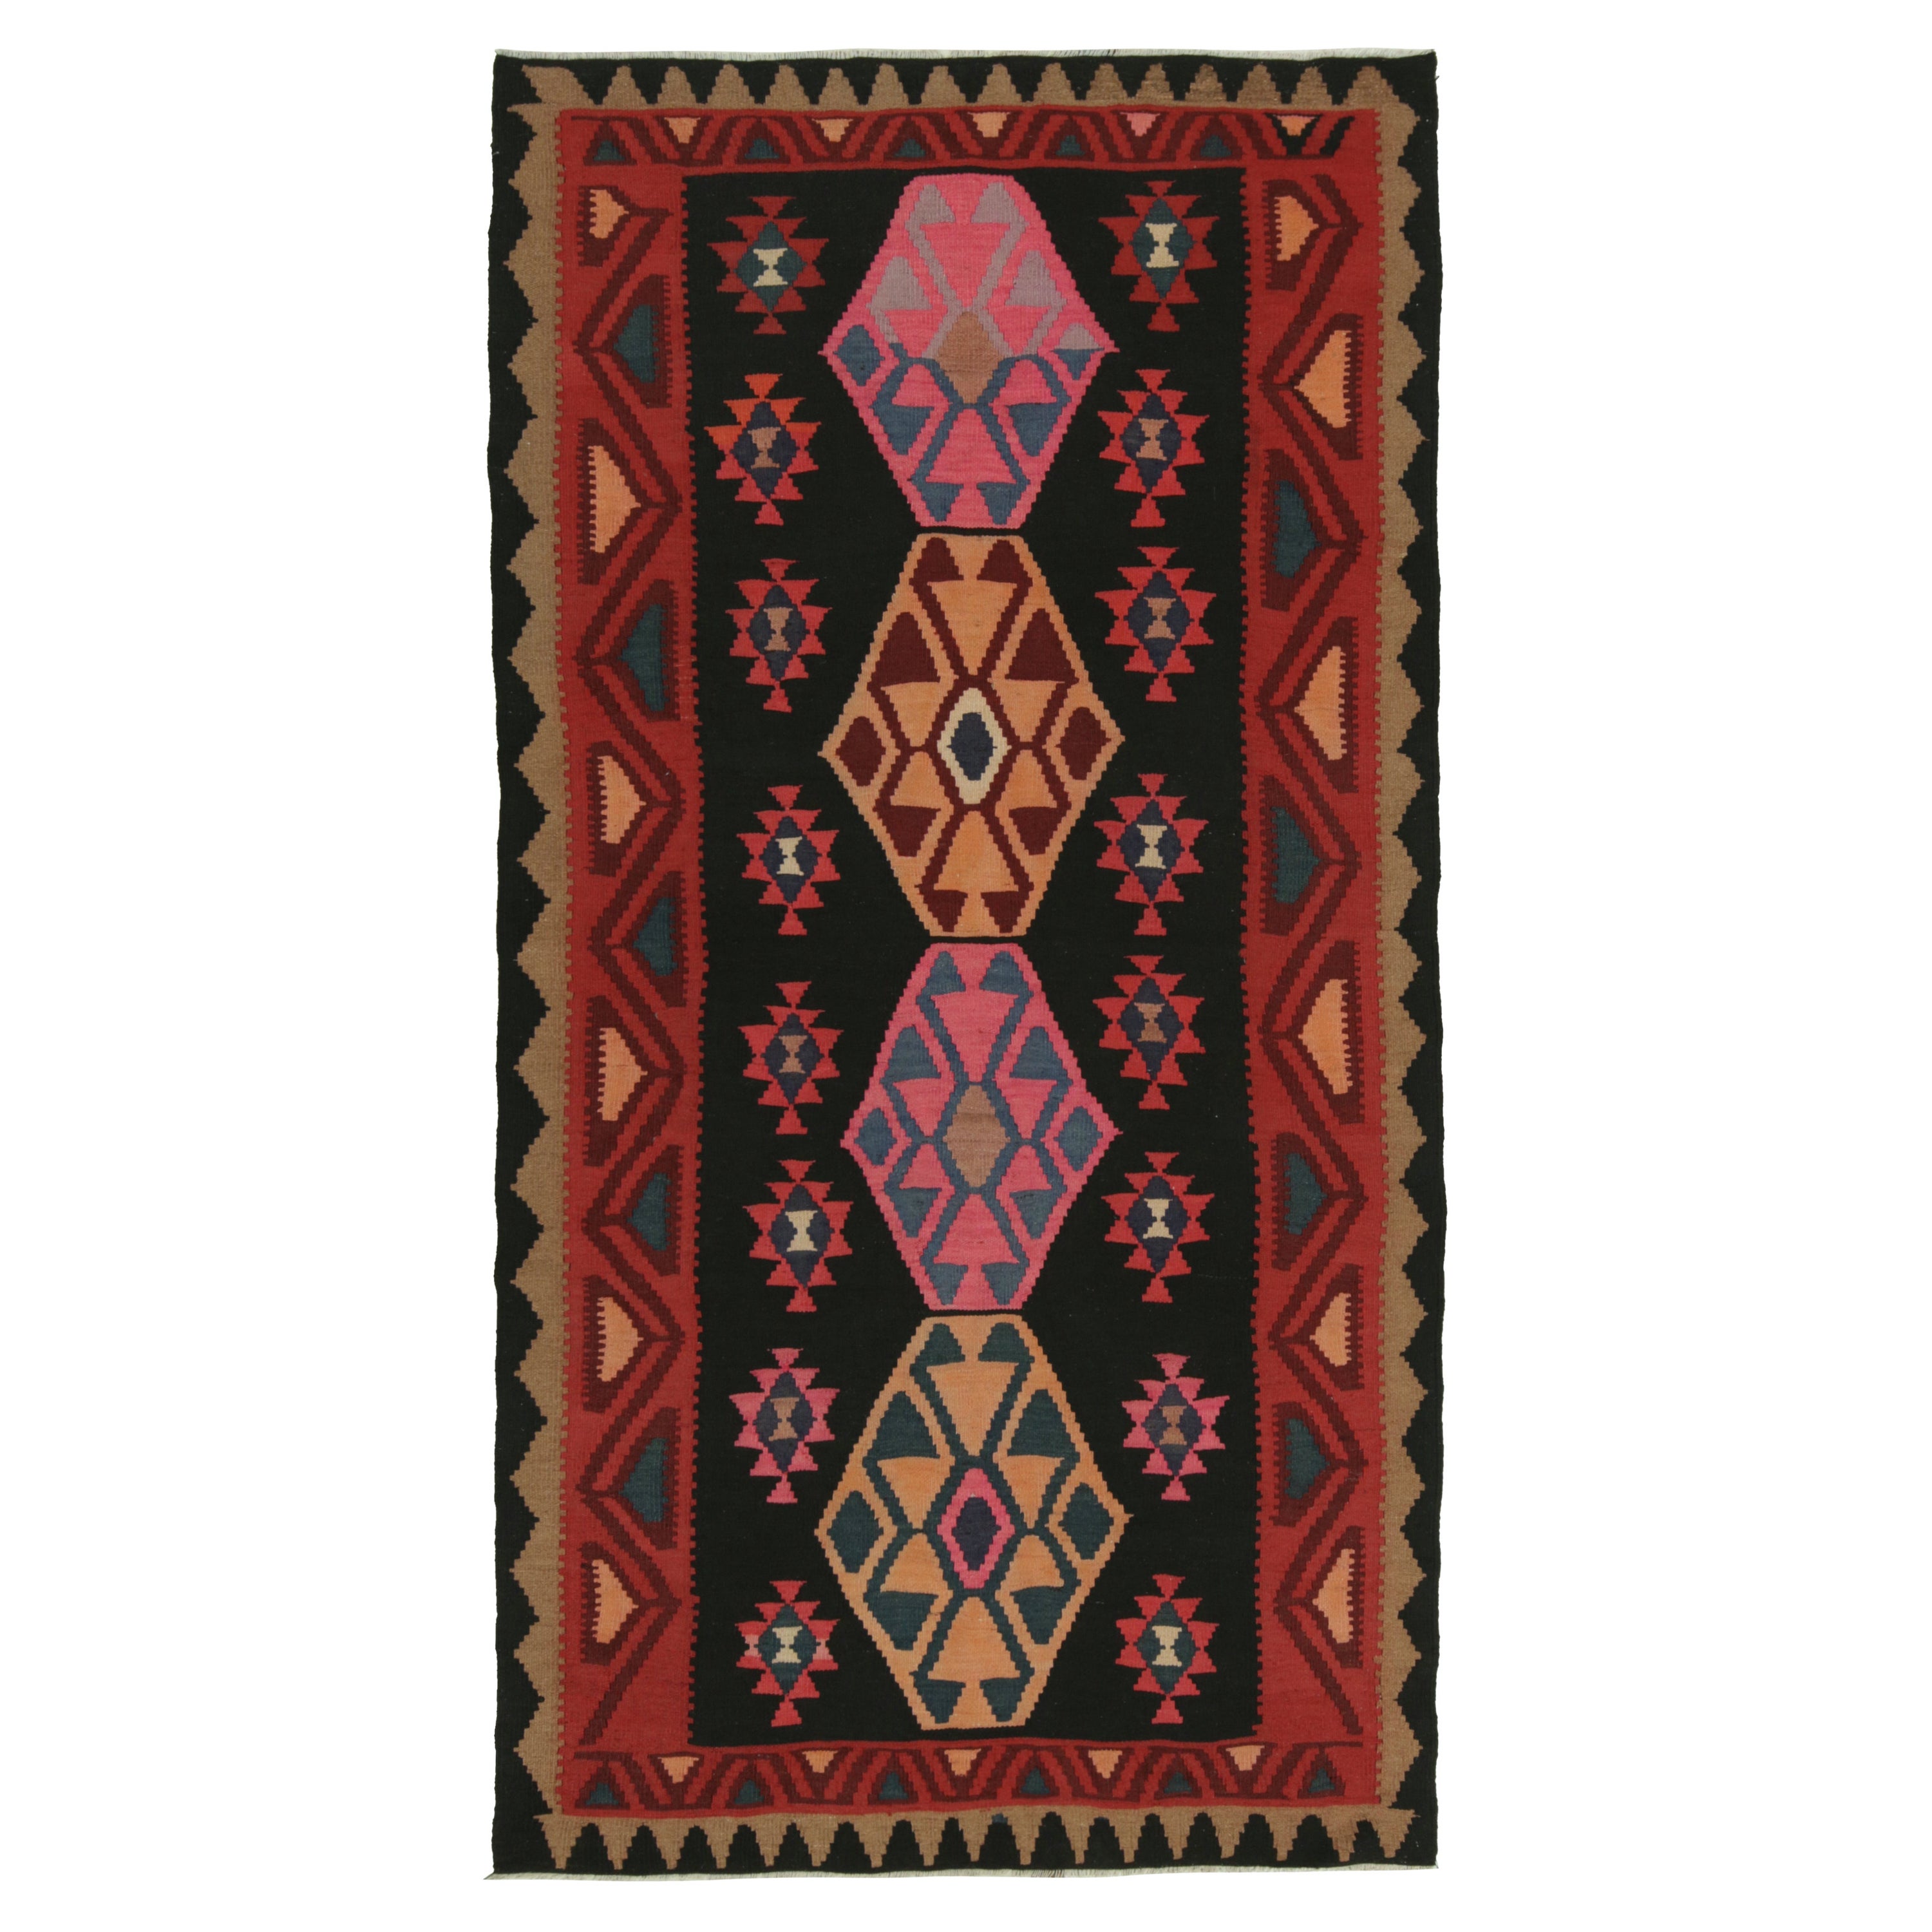 Vintage Persian Kilim in Red & Black, Colorful Medallion Patterns by Rug & Kilim